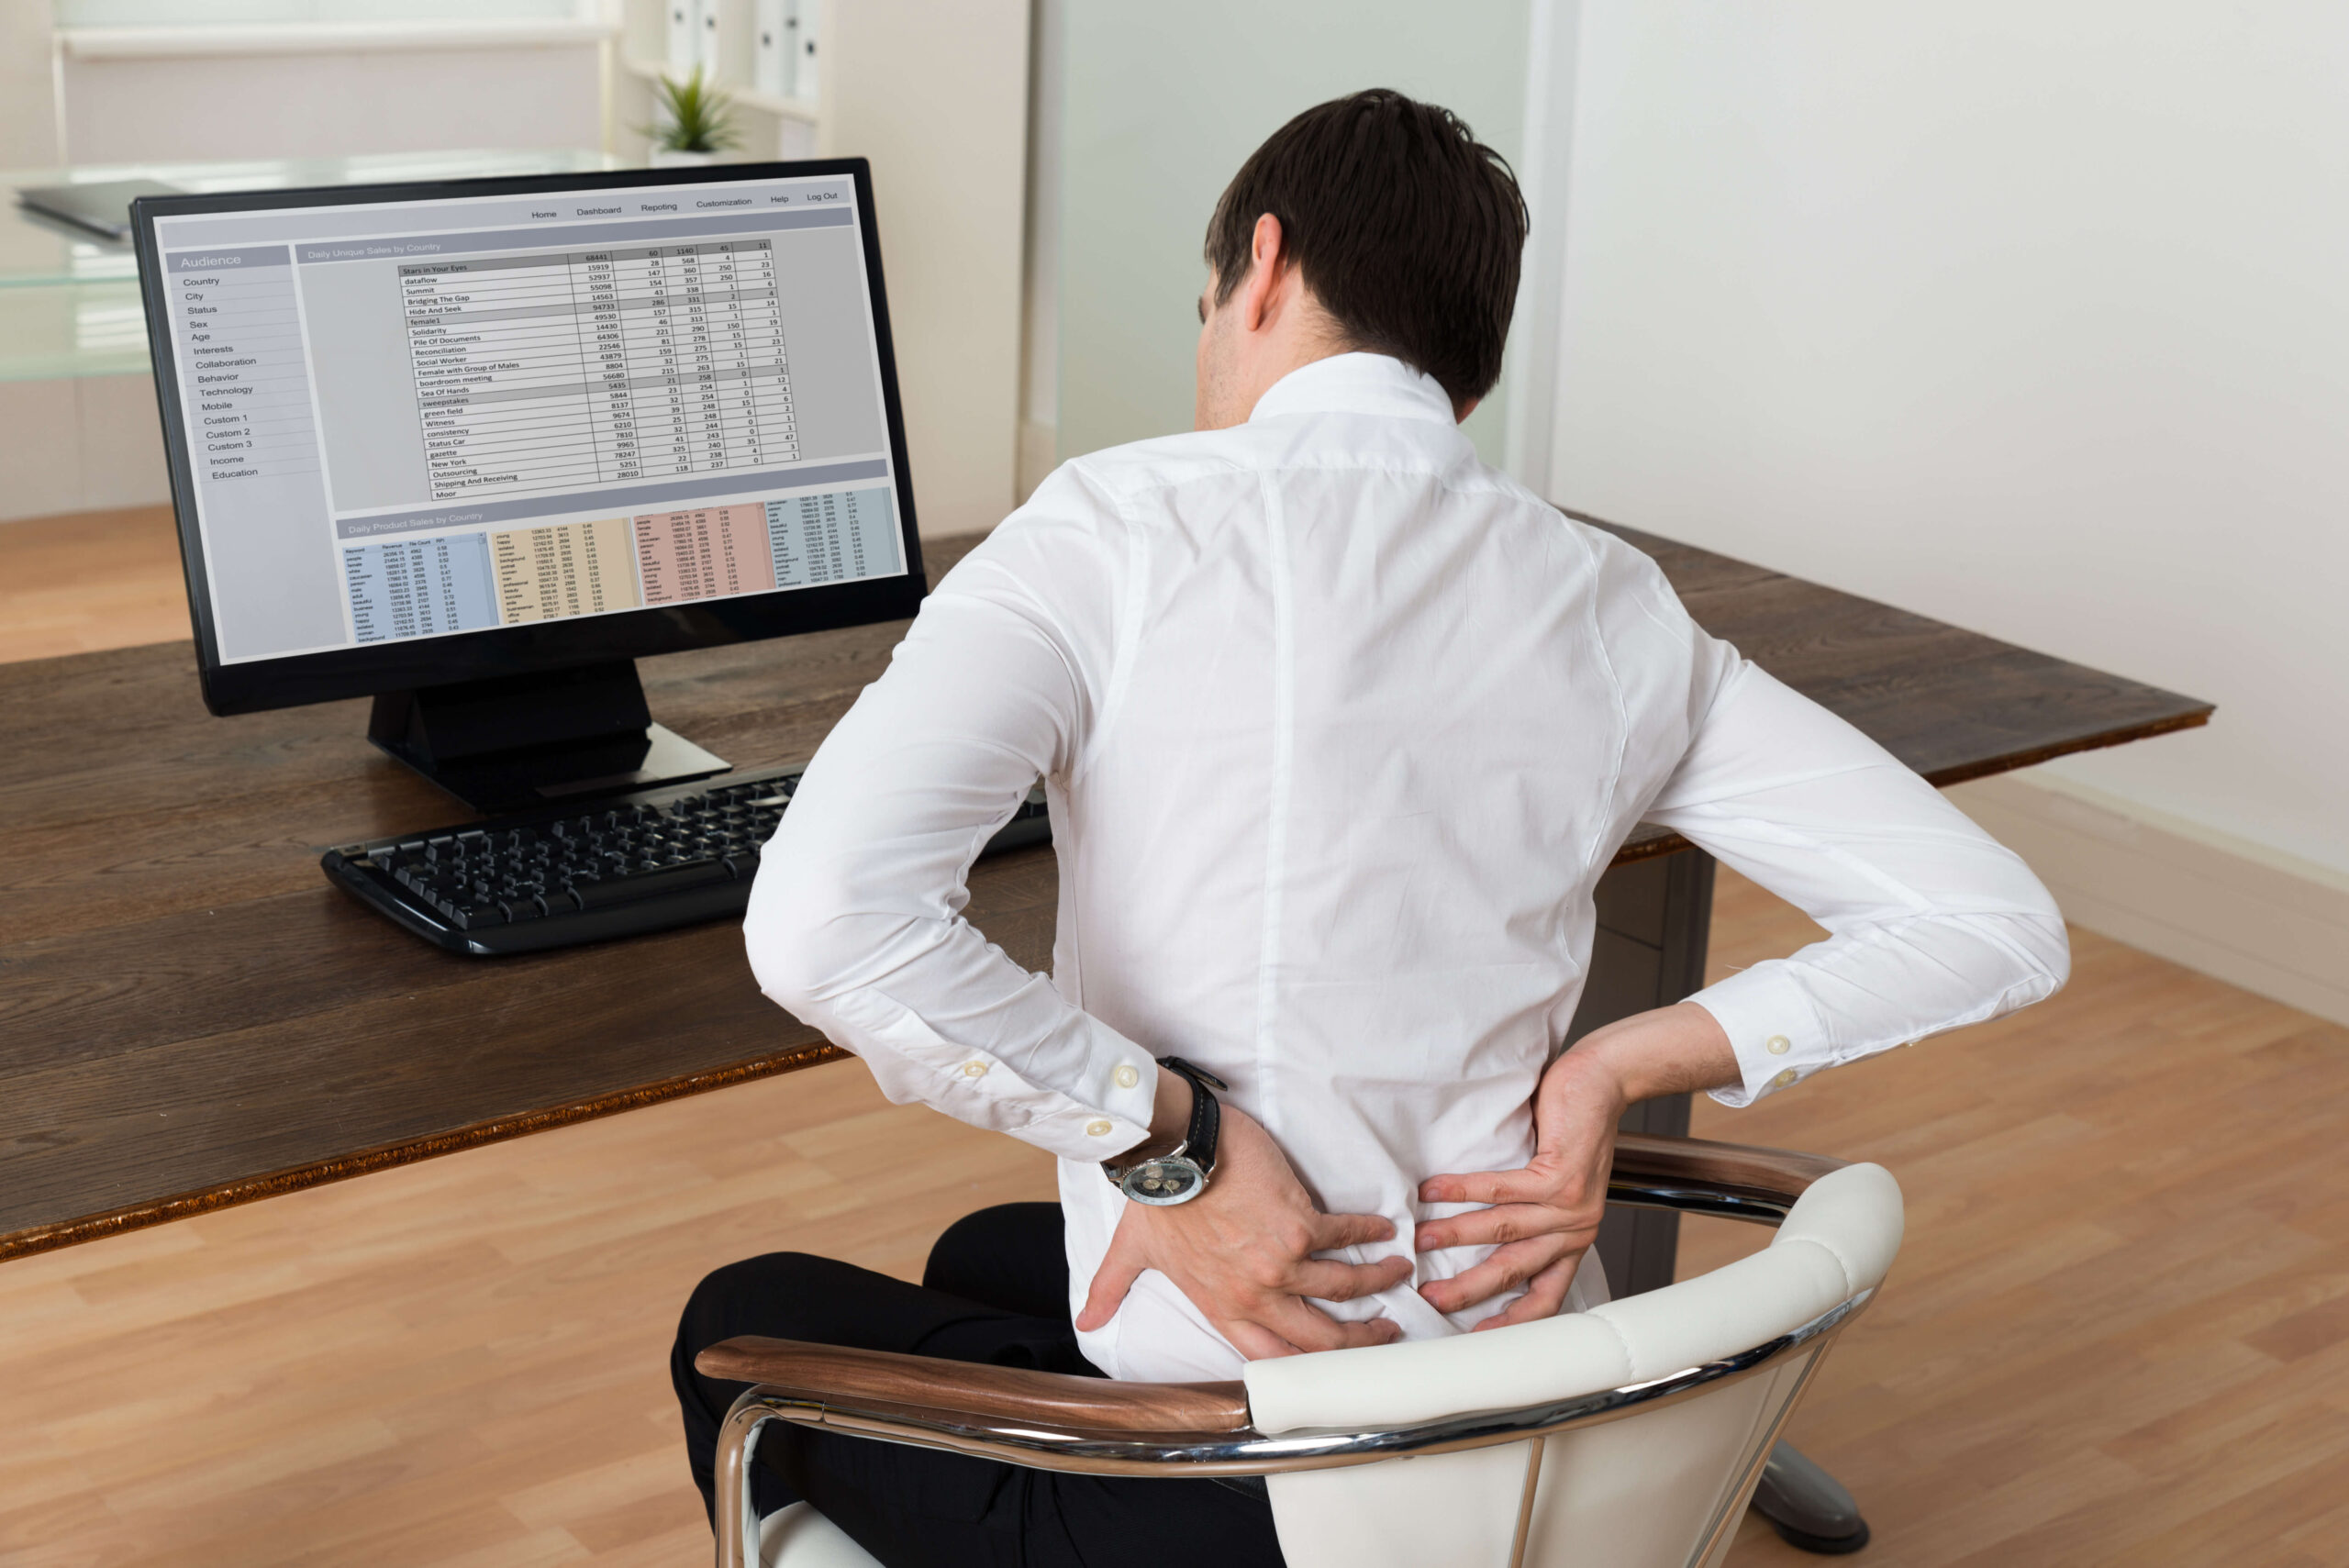 Bad Posture and Back Pain » The BioMechanics Method